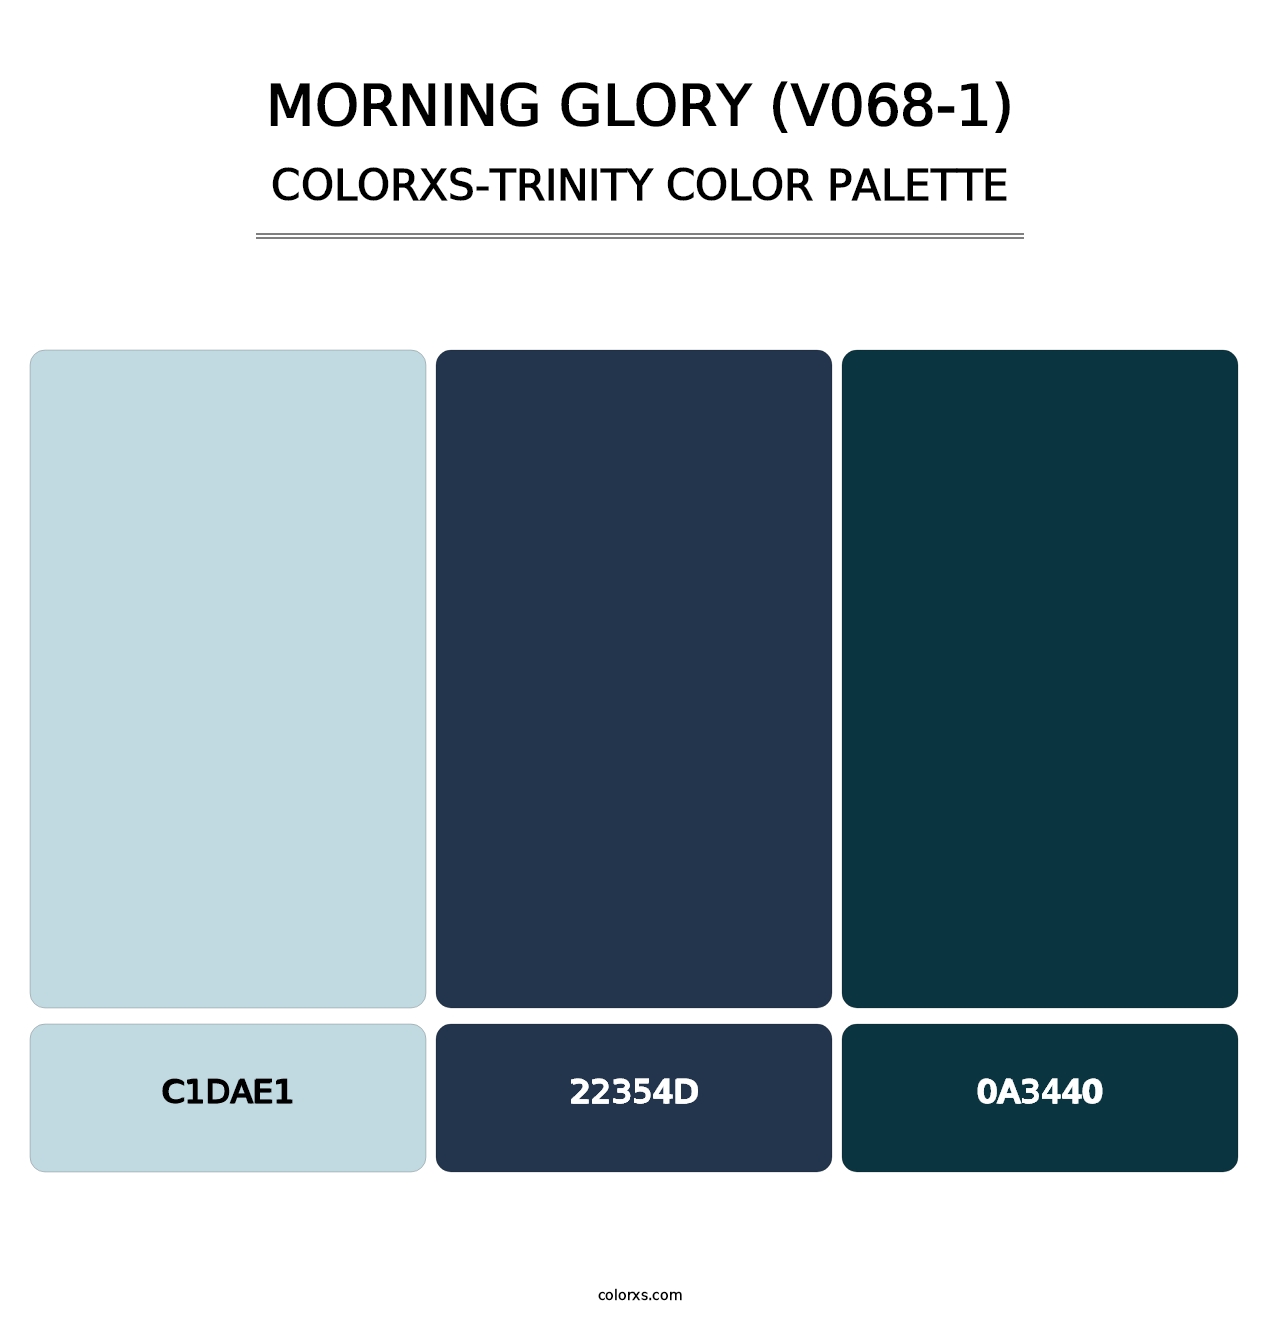 Morning Glory (V068-1) - Colorxs Trinity Palette